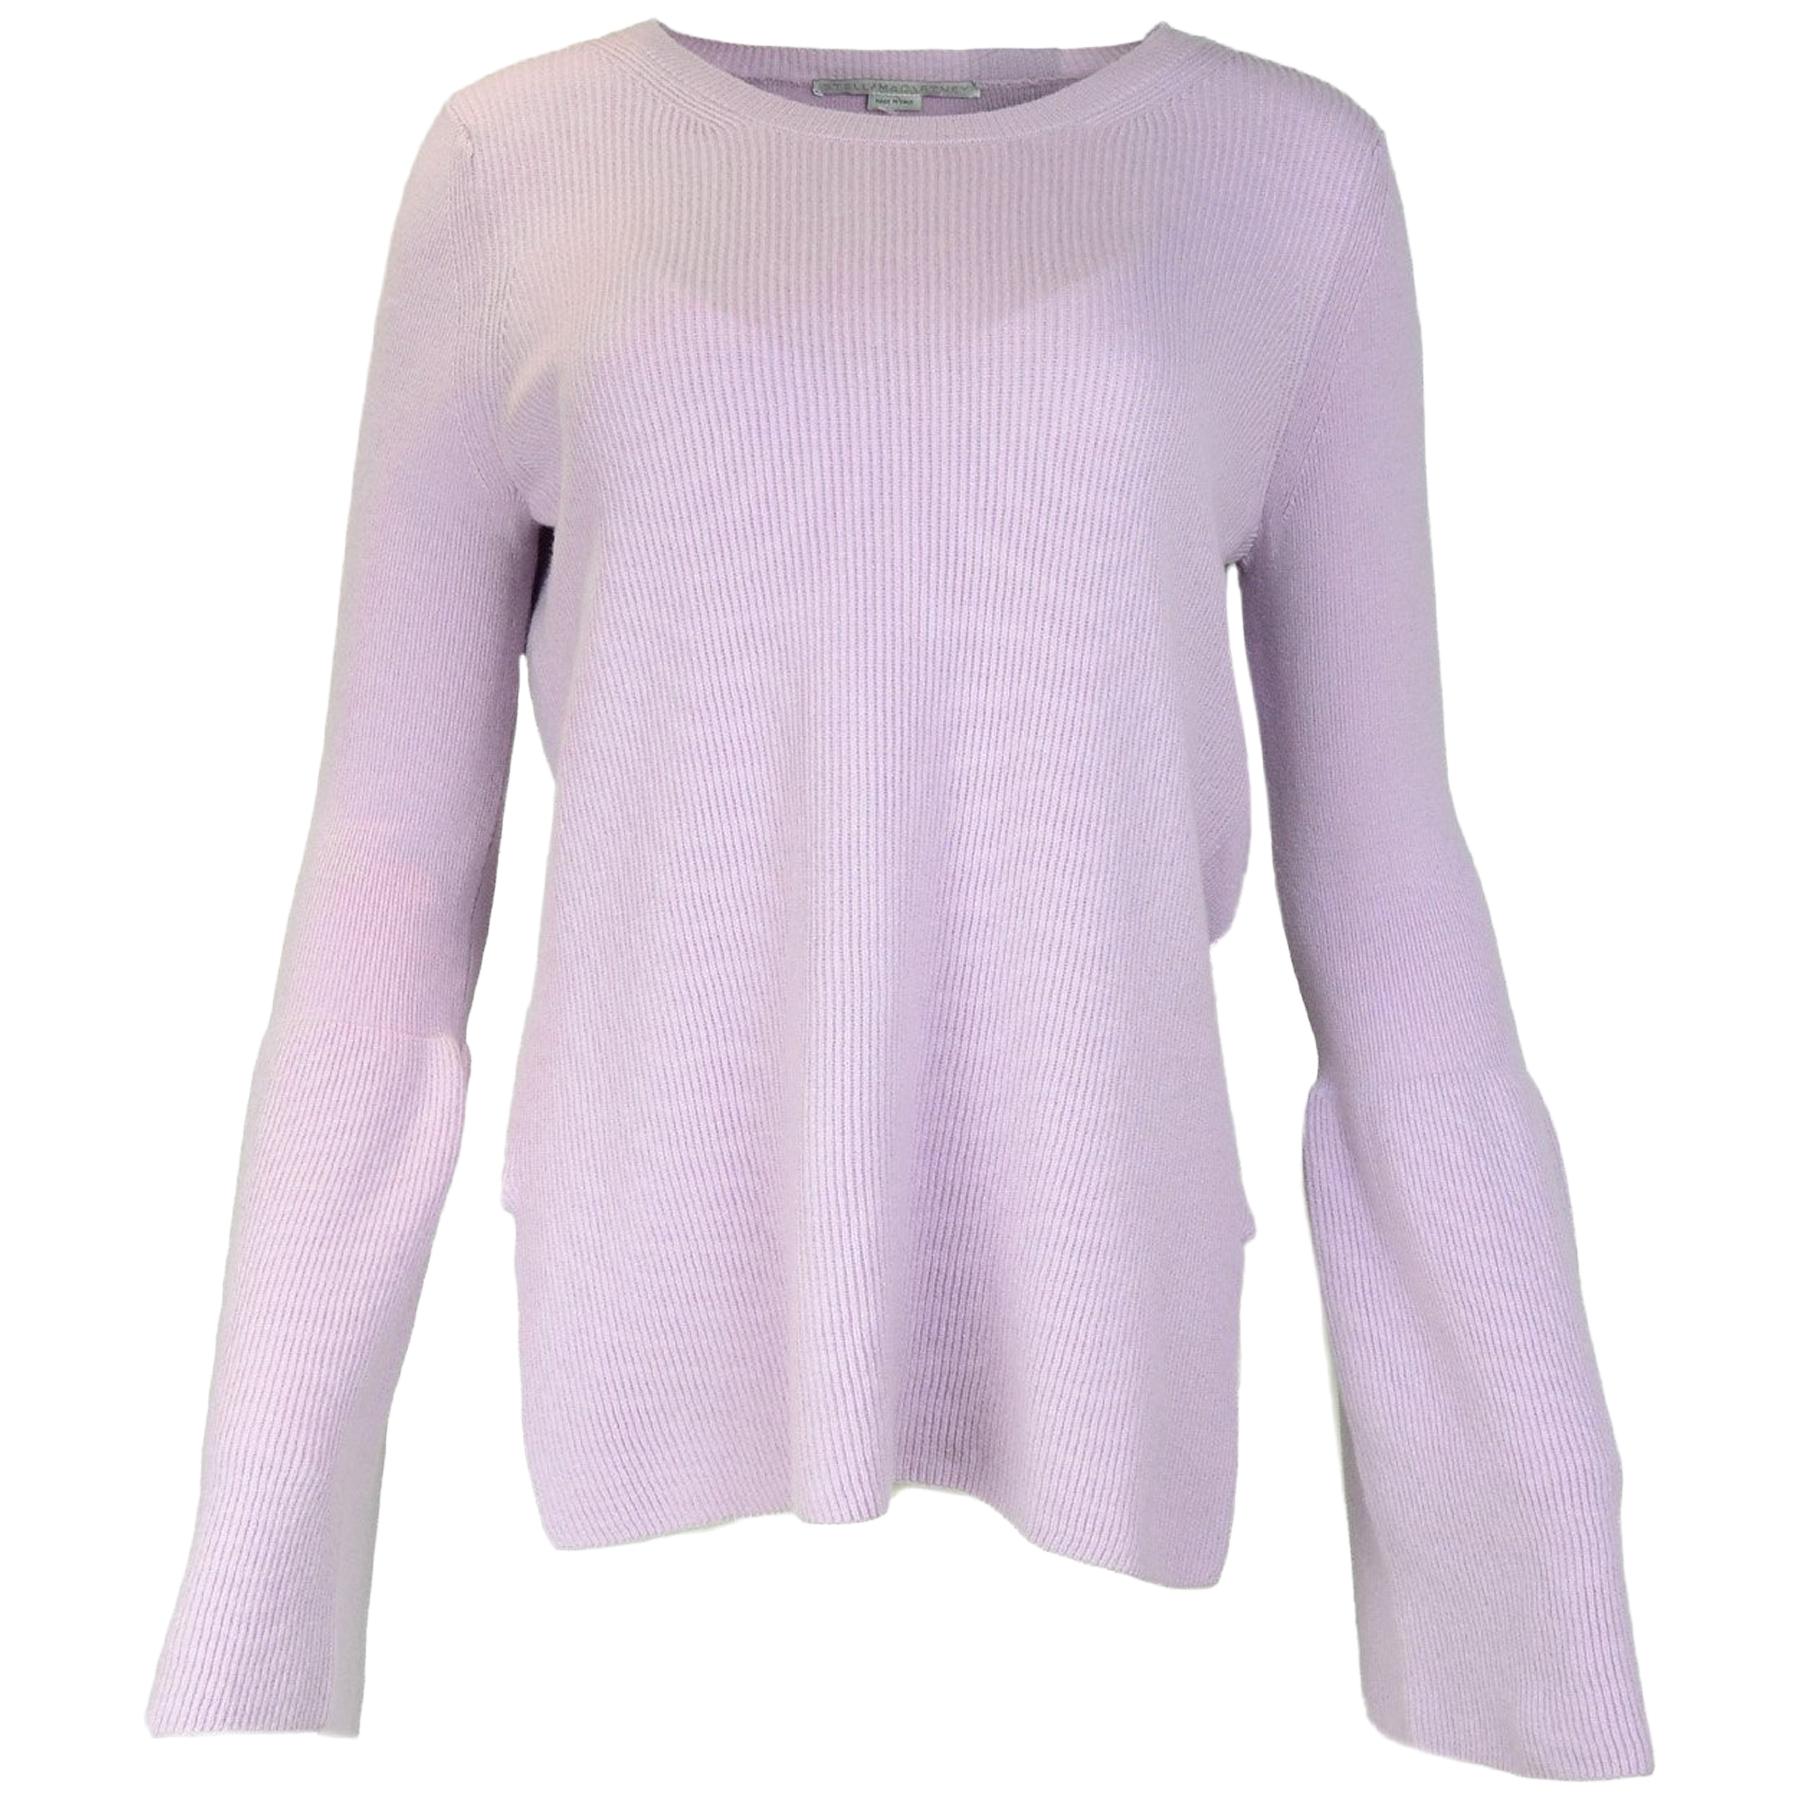 Stella McCartney NWT Lavender Wool High Low Sweater w Bell Sleeves Sz 42 rt $750